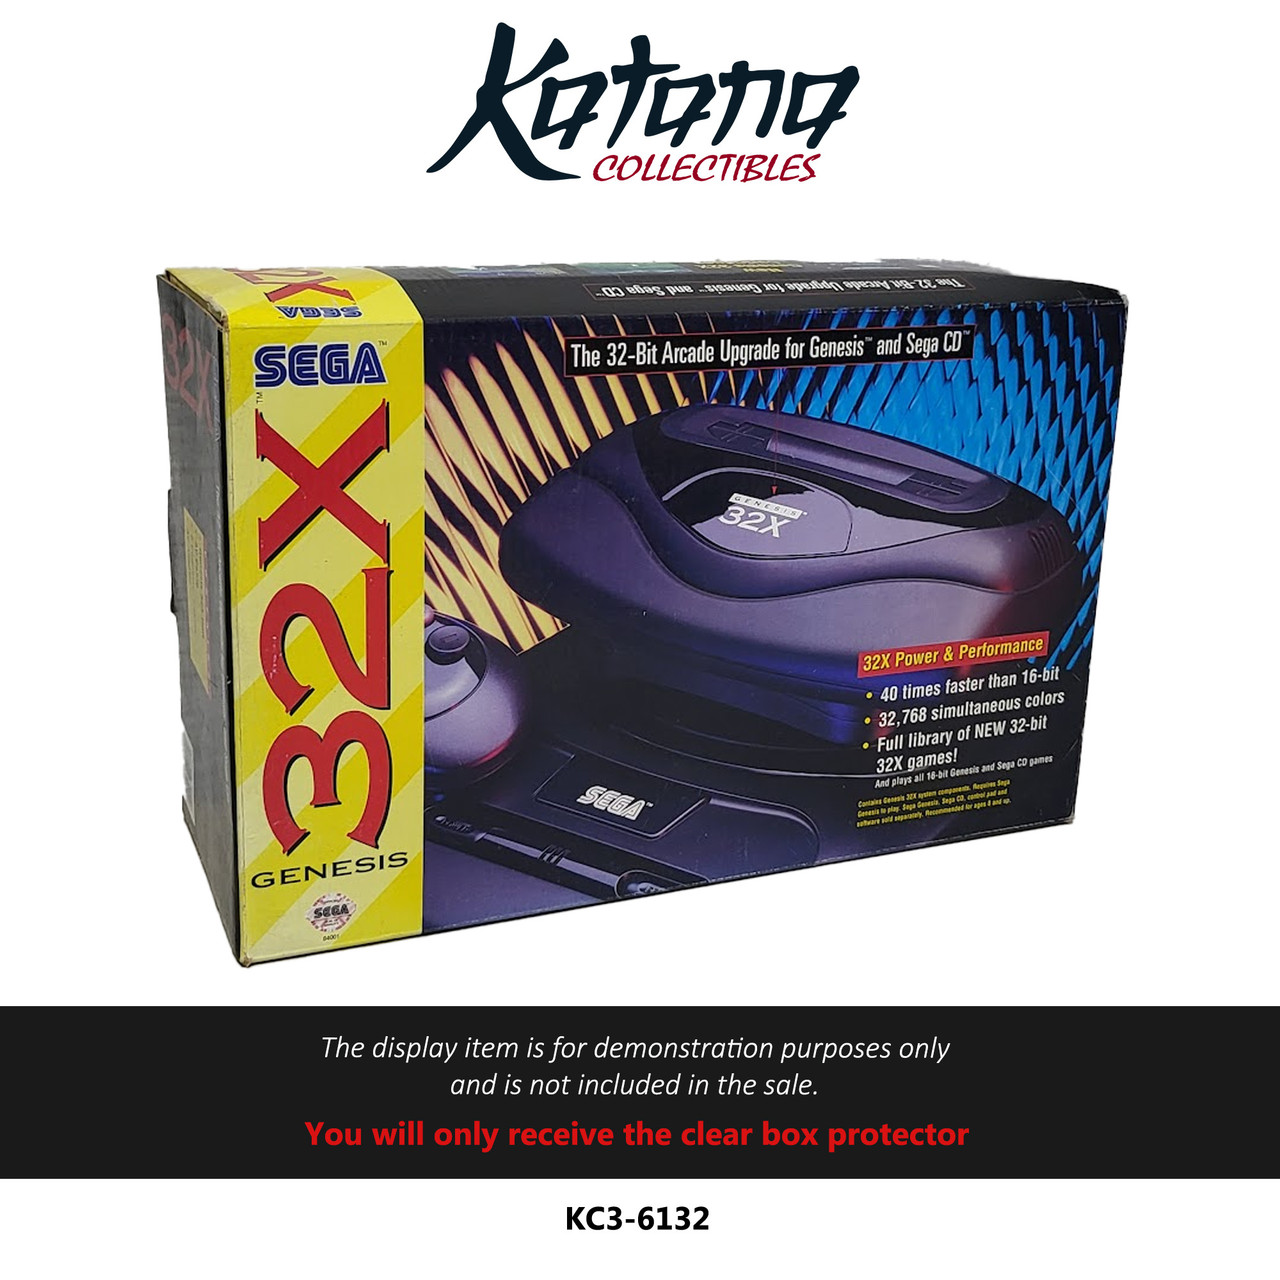 Katana Collectibles Protector For SEGA The 32-bit Arcade Upgrade For Genesis and Sega CD